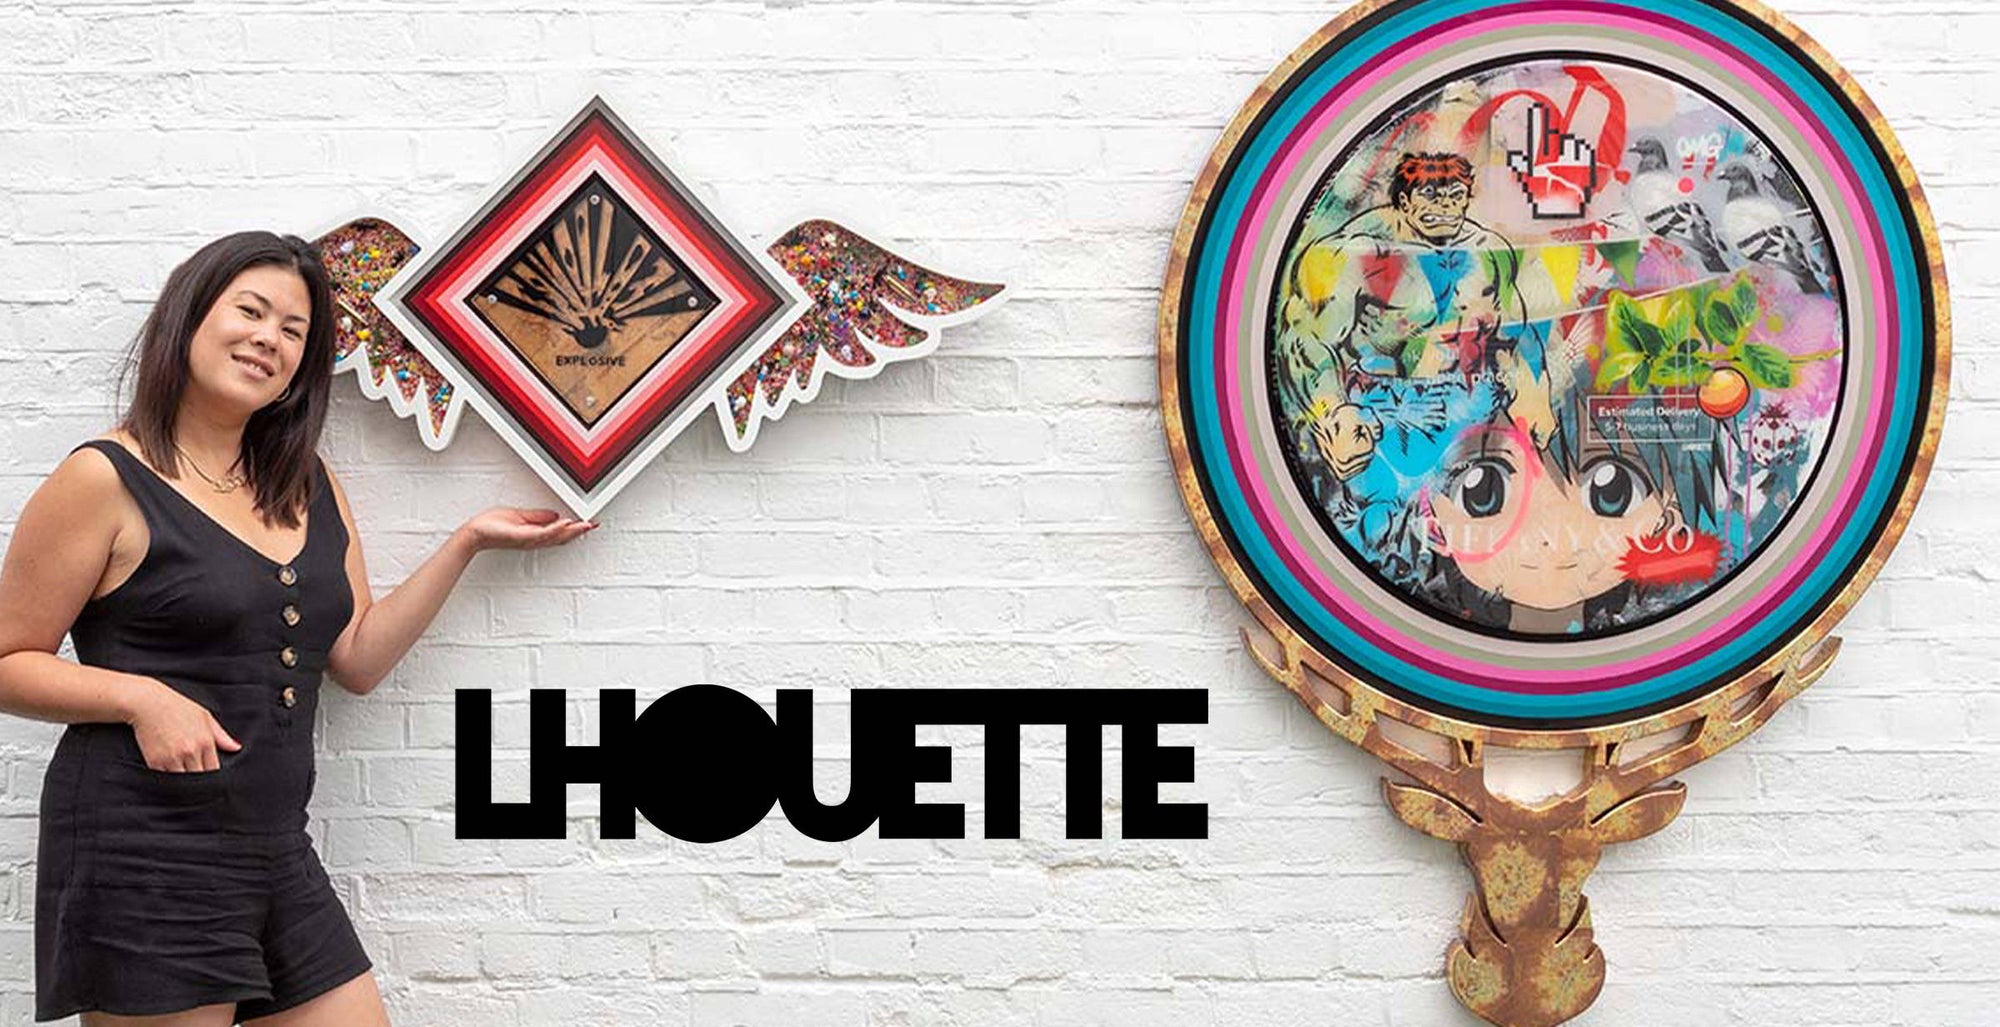 Lhouette Art; New Originals Unleashed